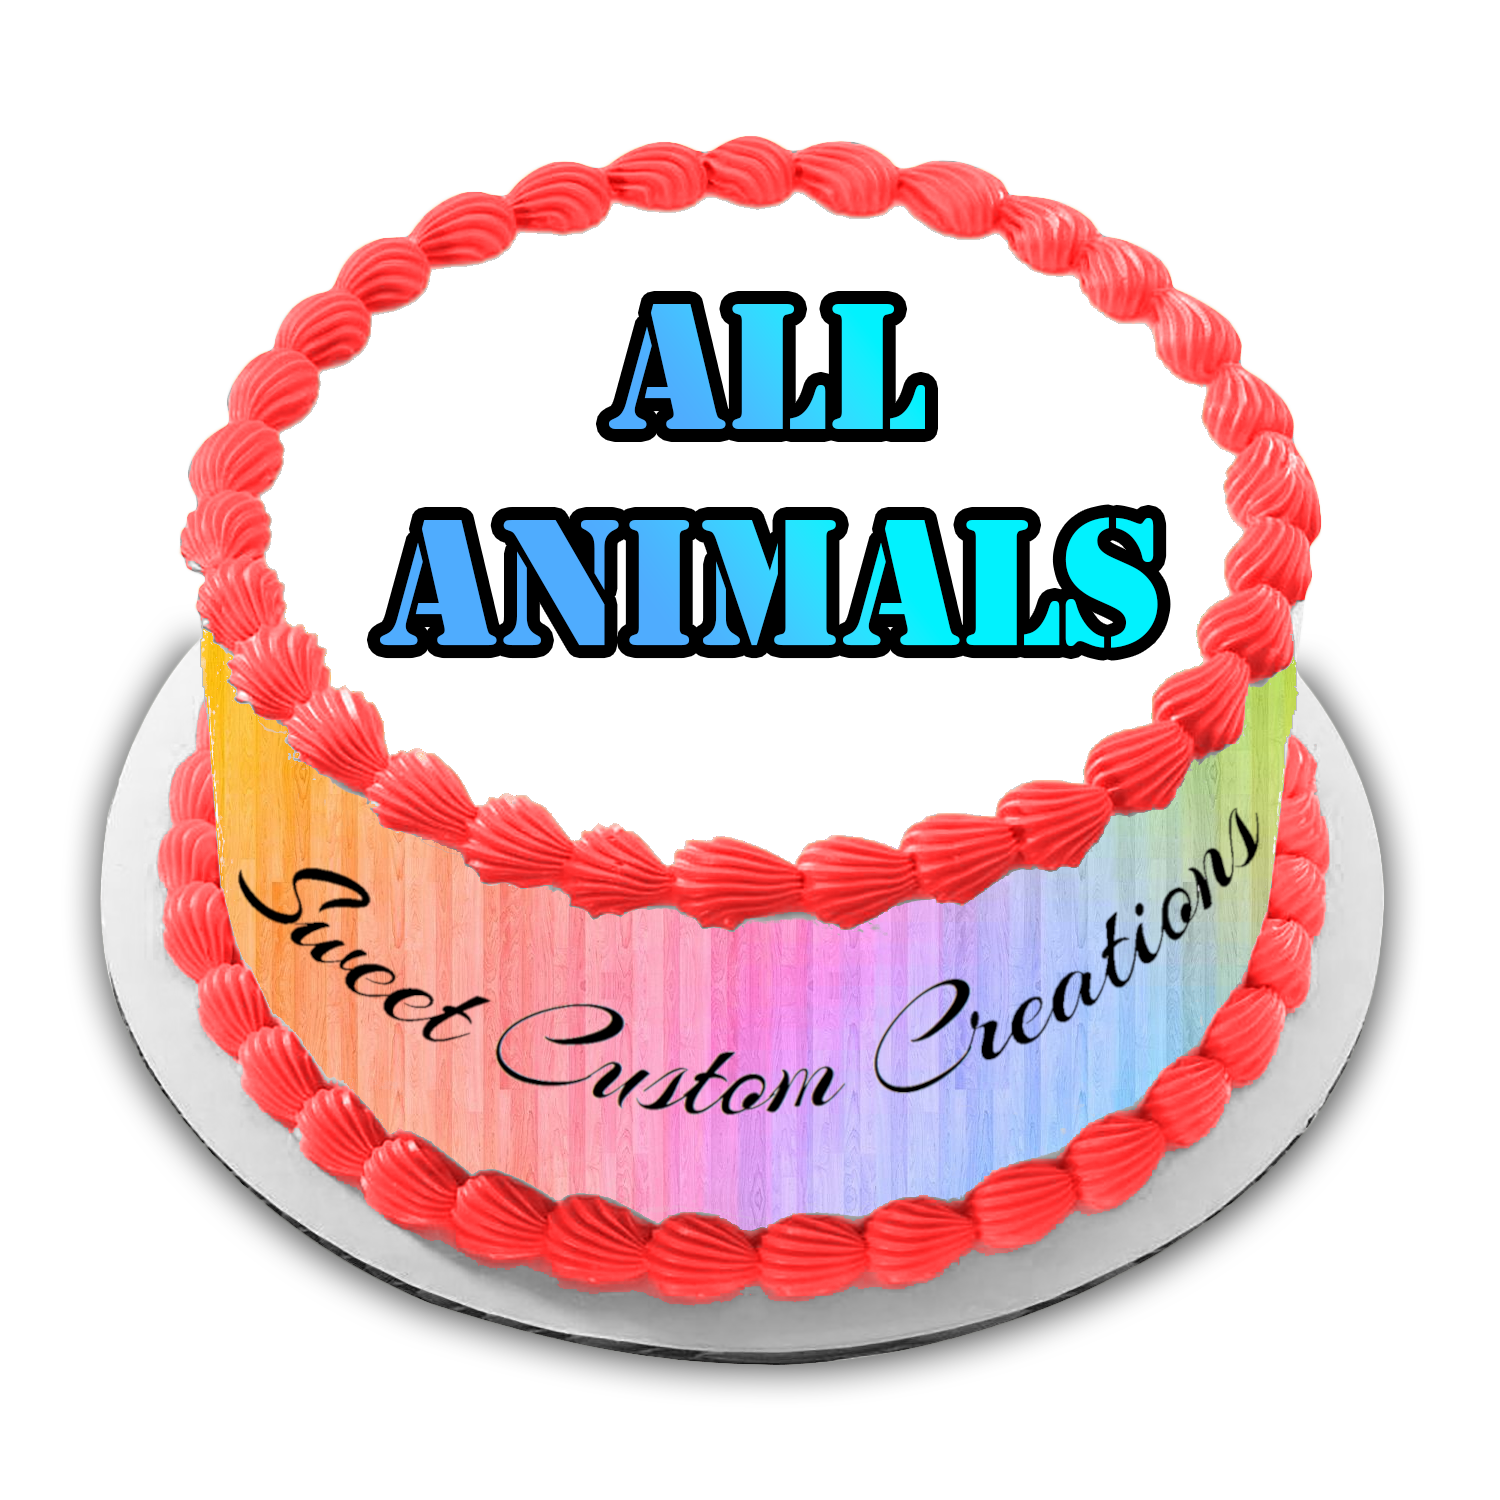 View all animals â sweet custom creations